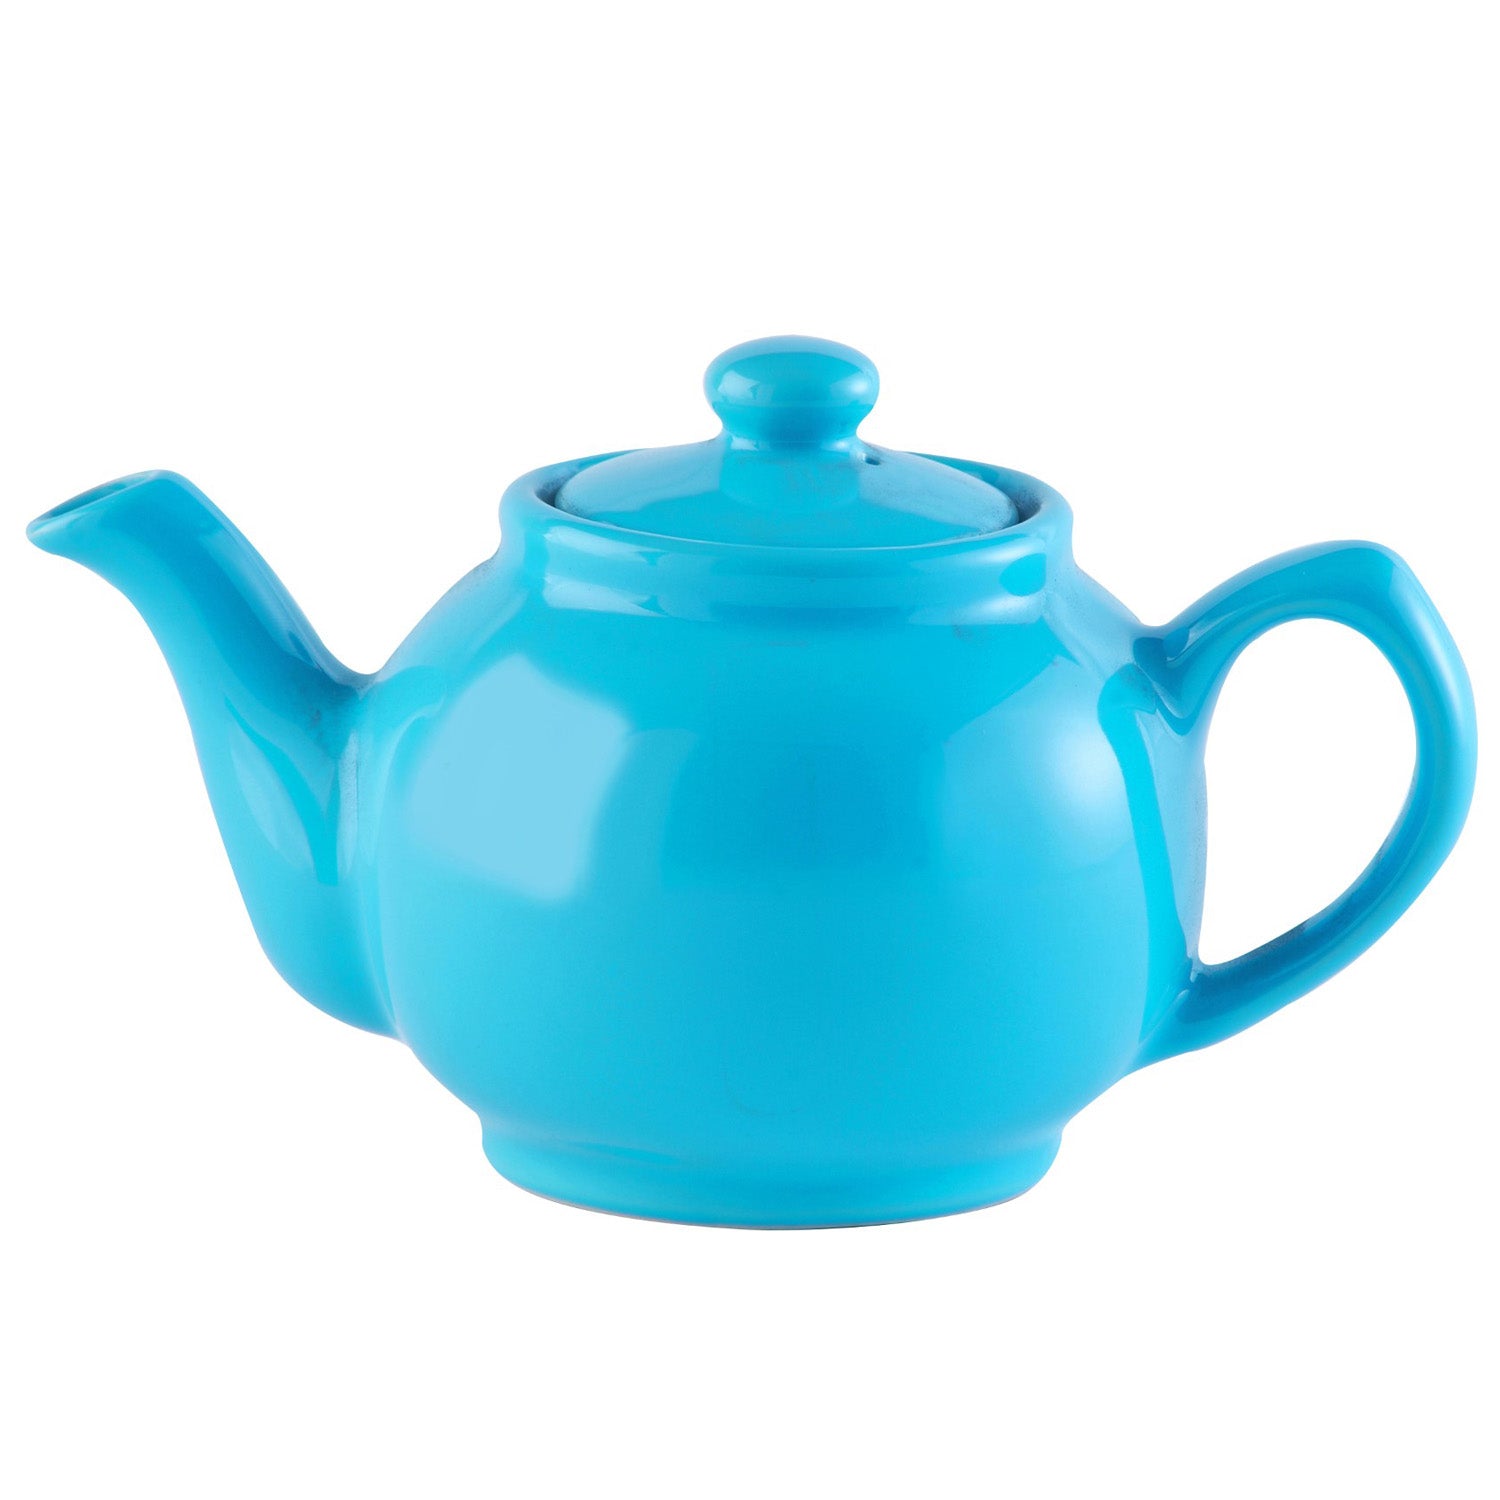 Large Brights Blue Porcelain Tea Coffee 6 Cup Teapot Serving